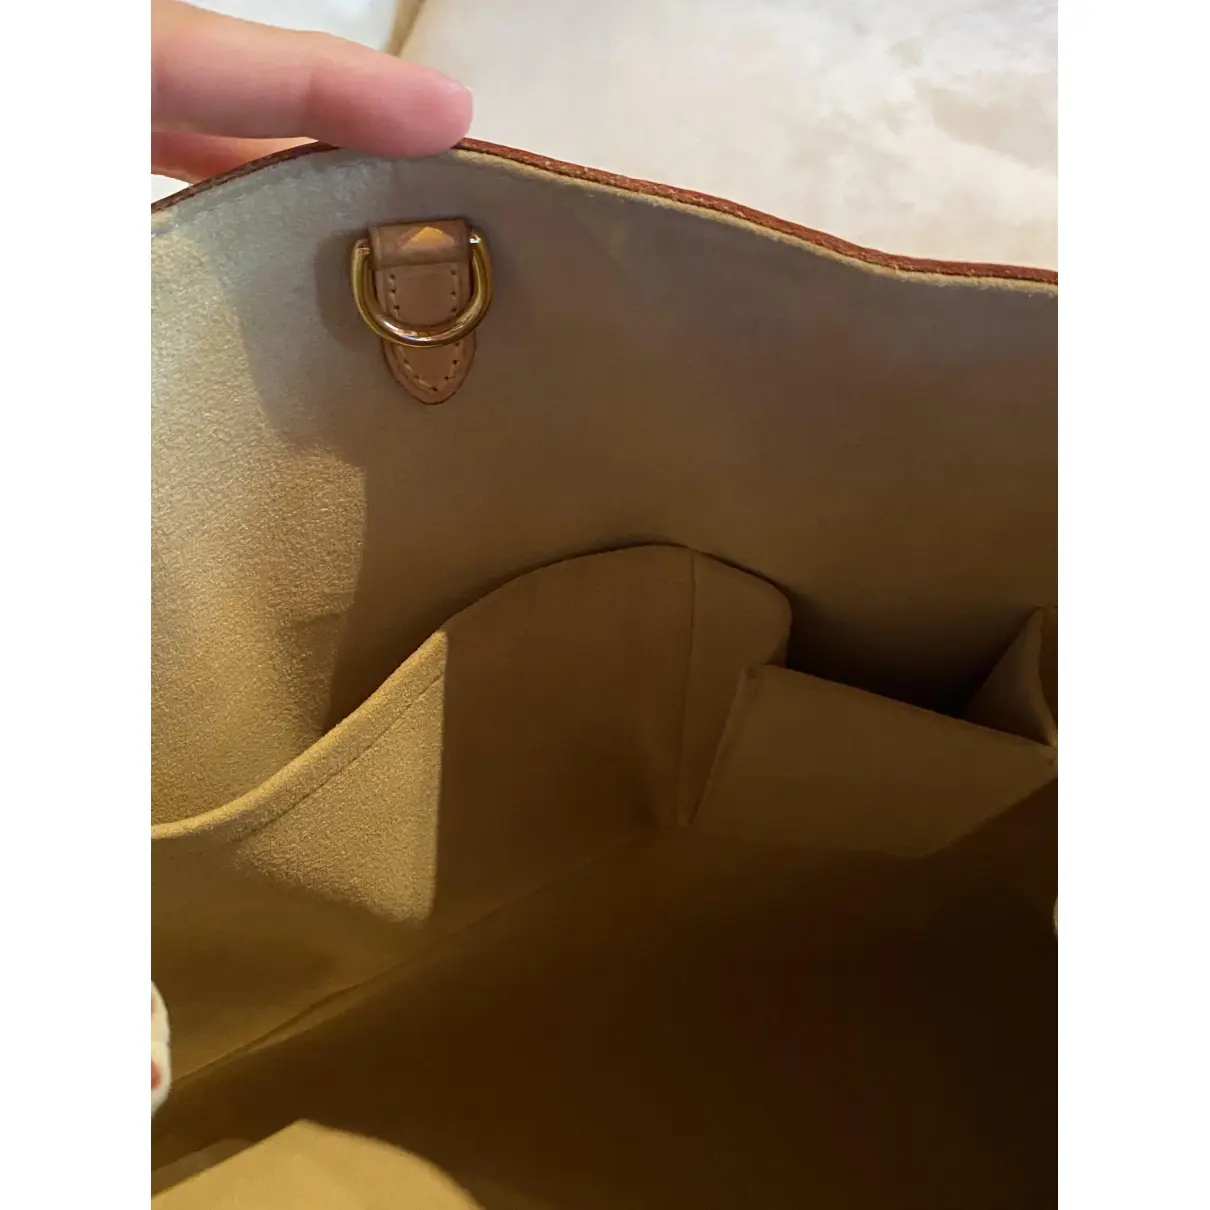 Buy Louis Vuitton Hampstead cloth handbag online